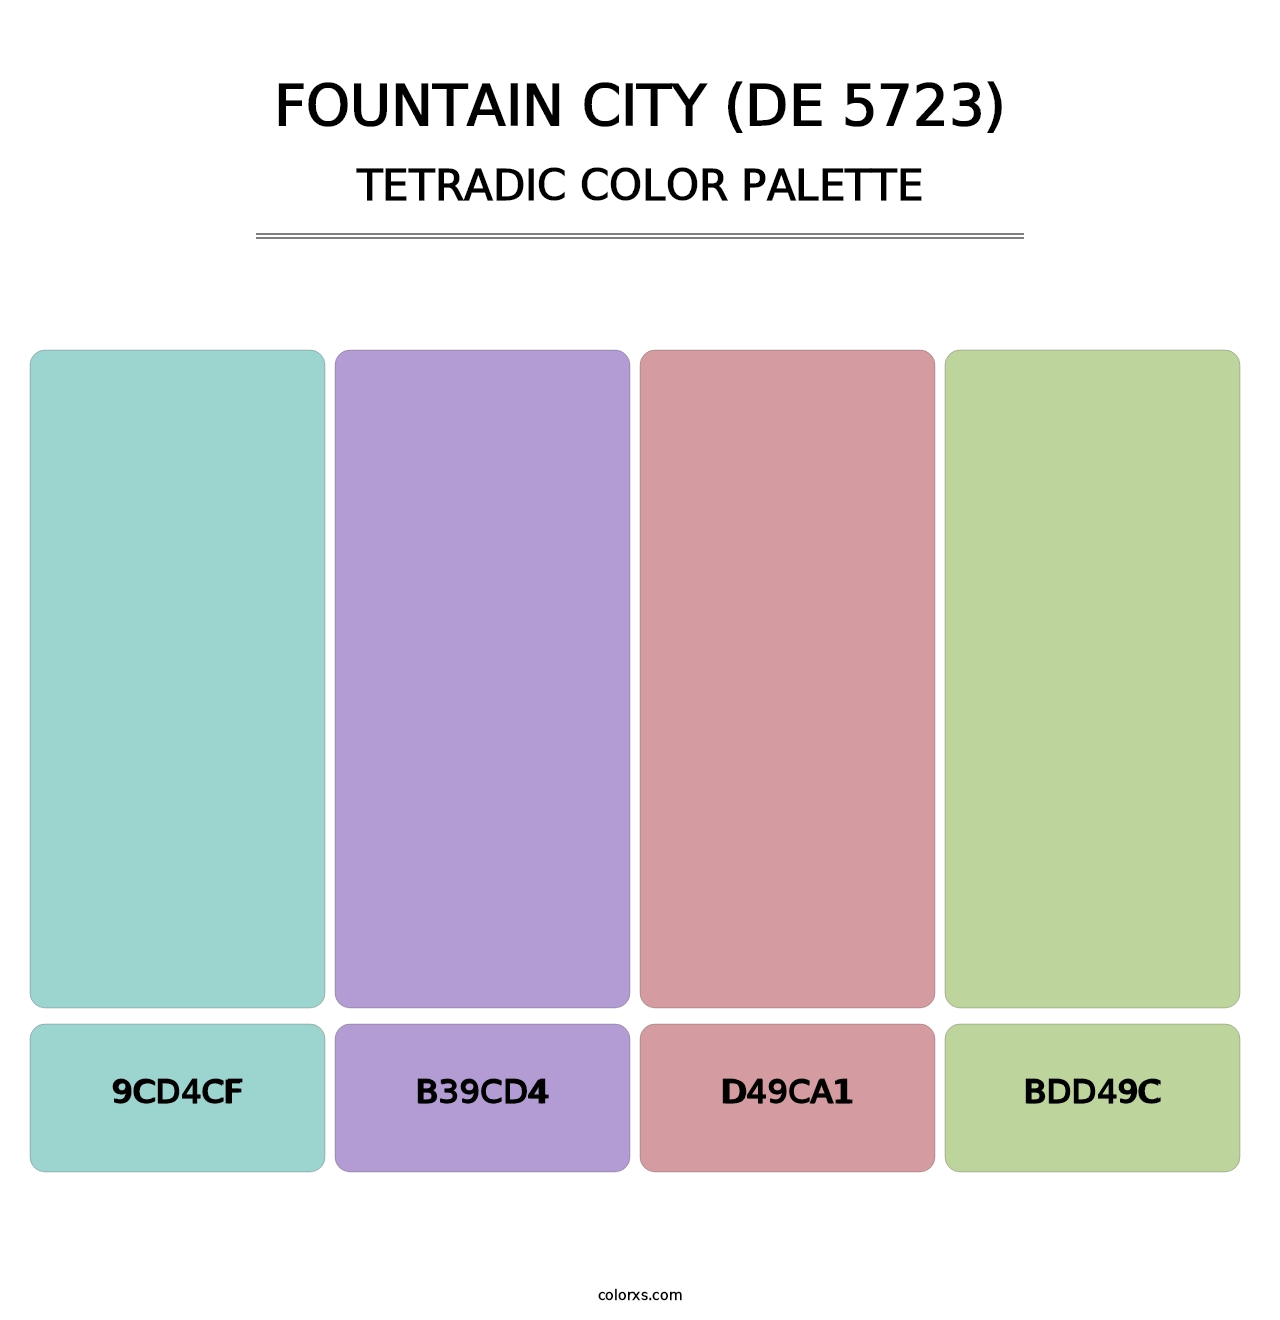 Fountain City (DE 5723) - Tetradic Color Palette